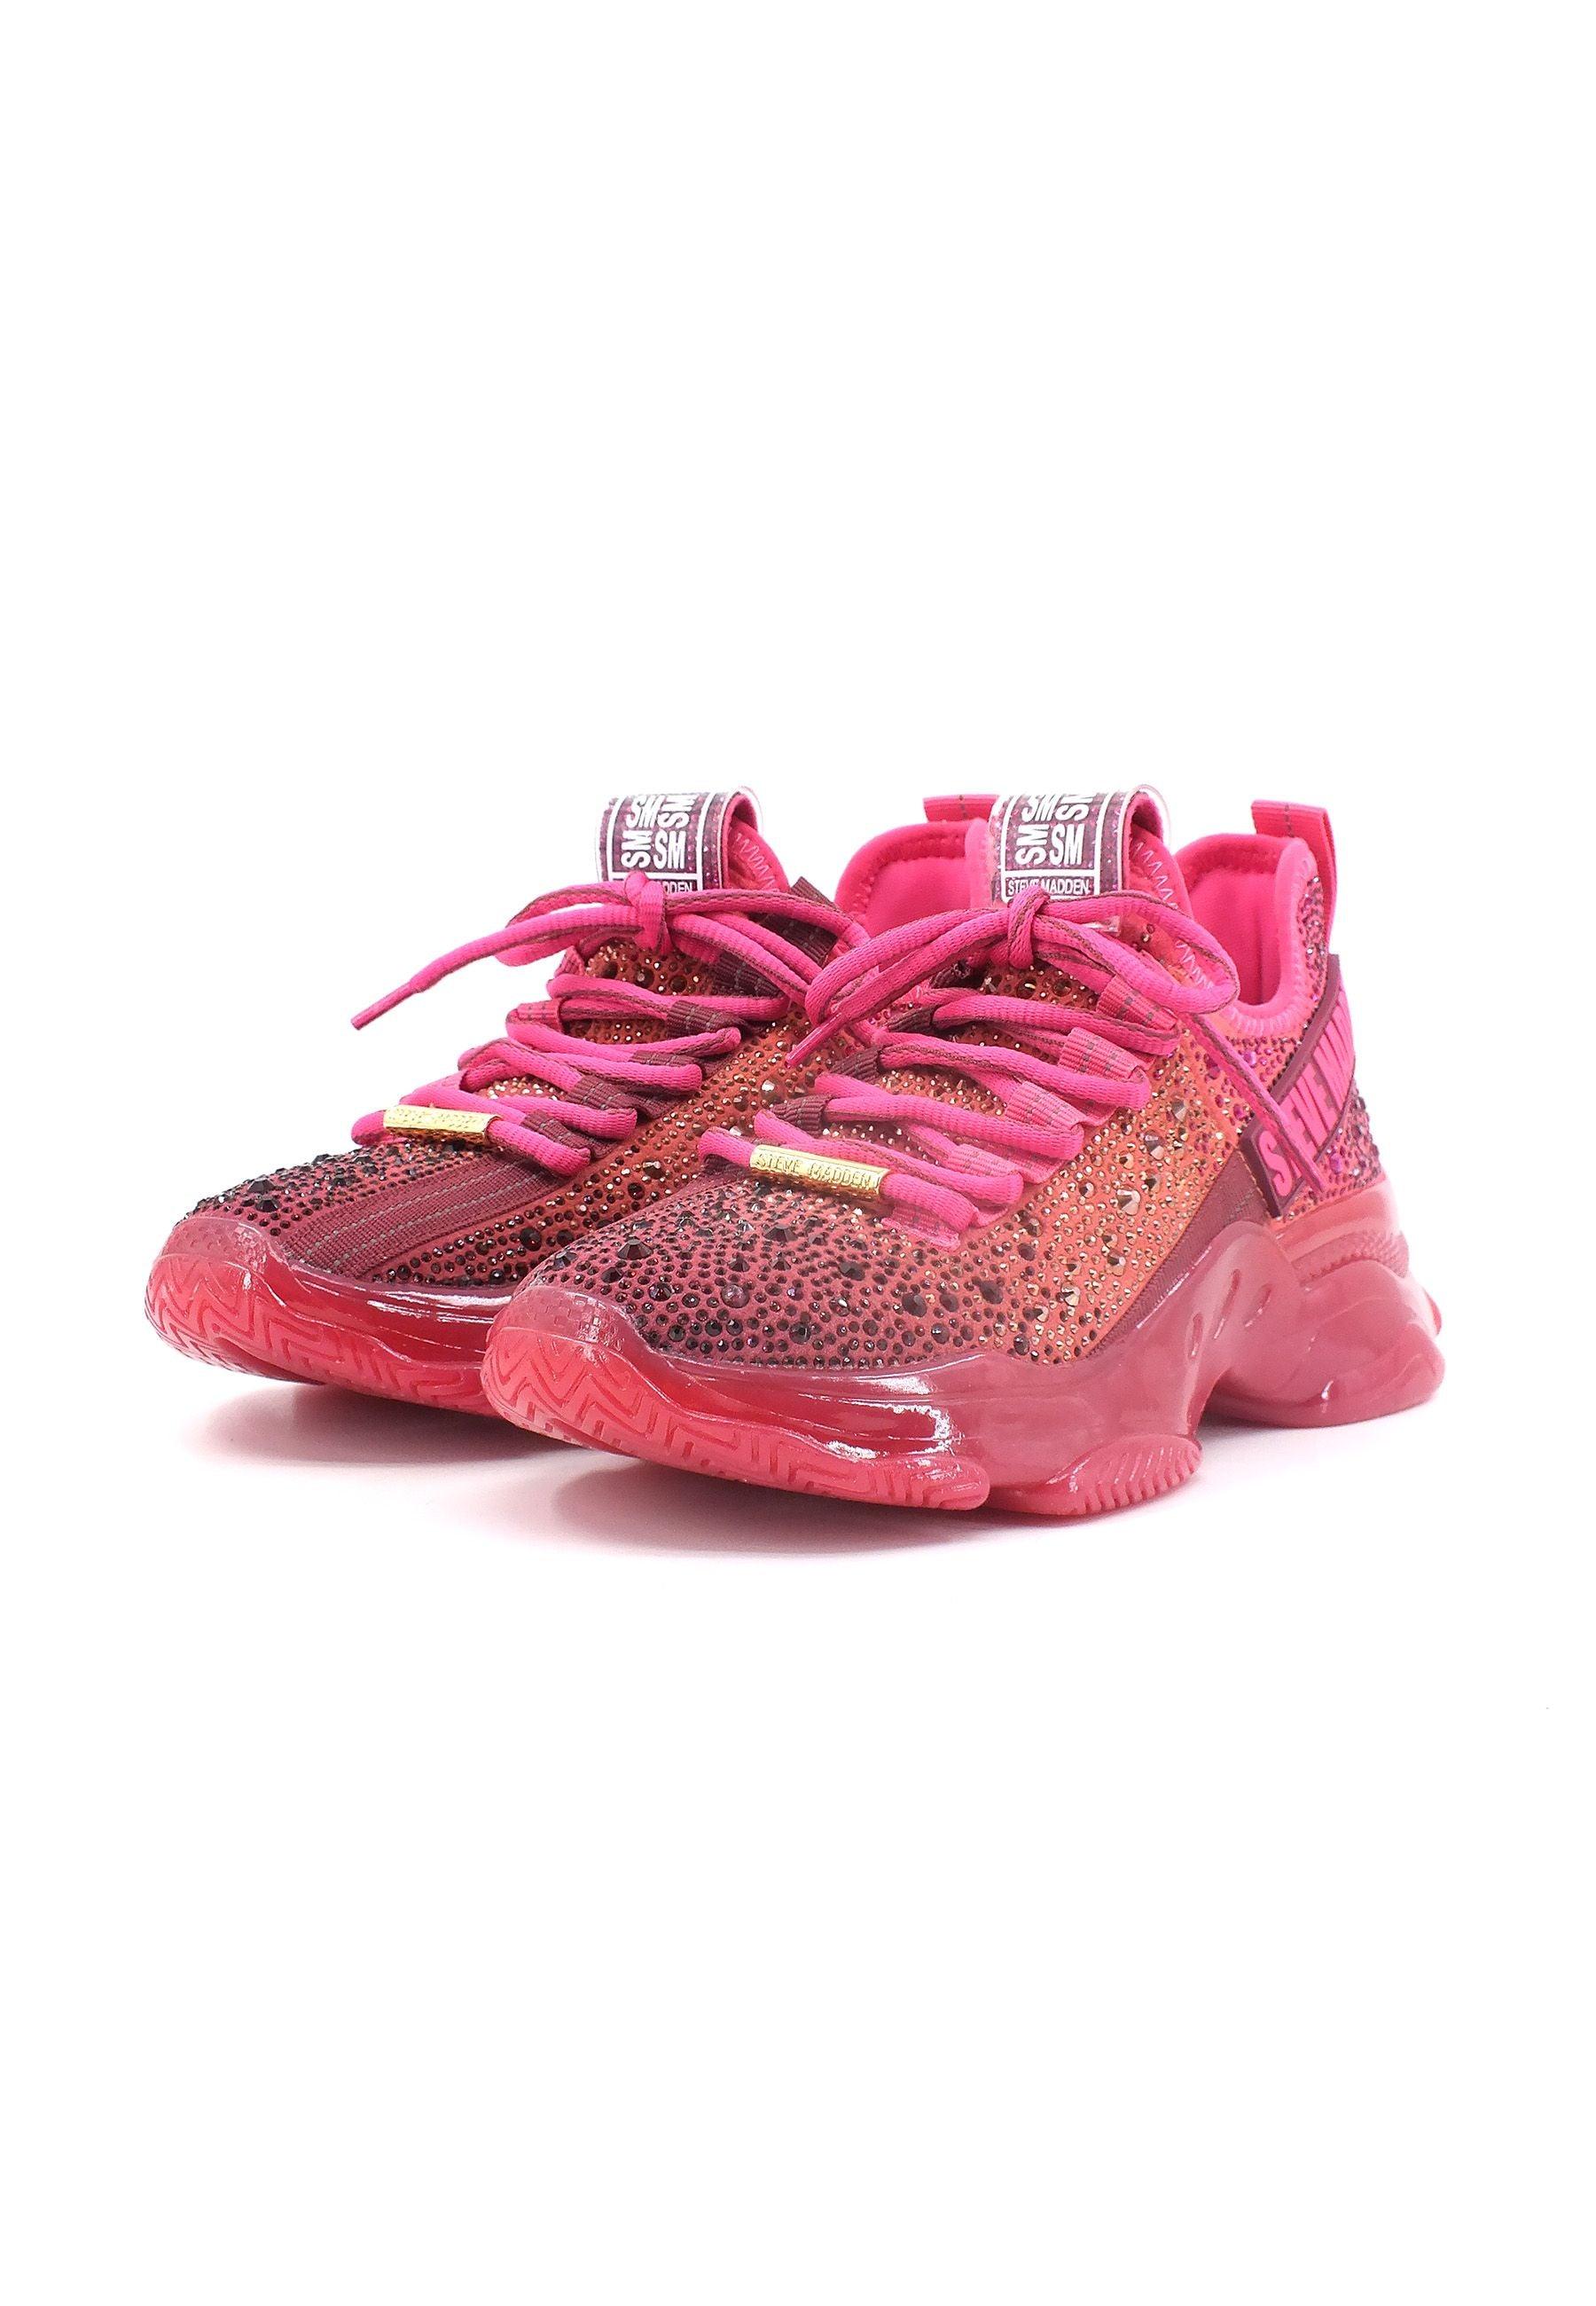 STEVE MADDEN Mistica Sneaker Donna Raspberry Rosa MIST05S1 - Sandrini Calzature e Abbigliamento